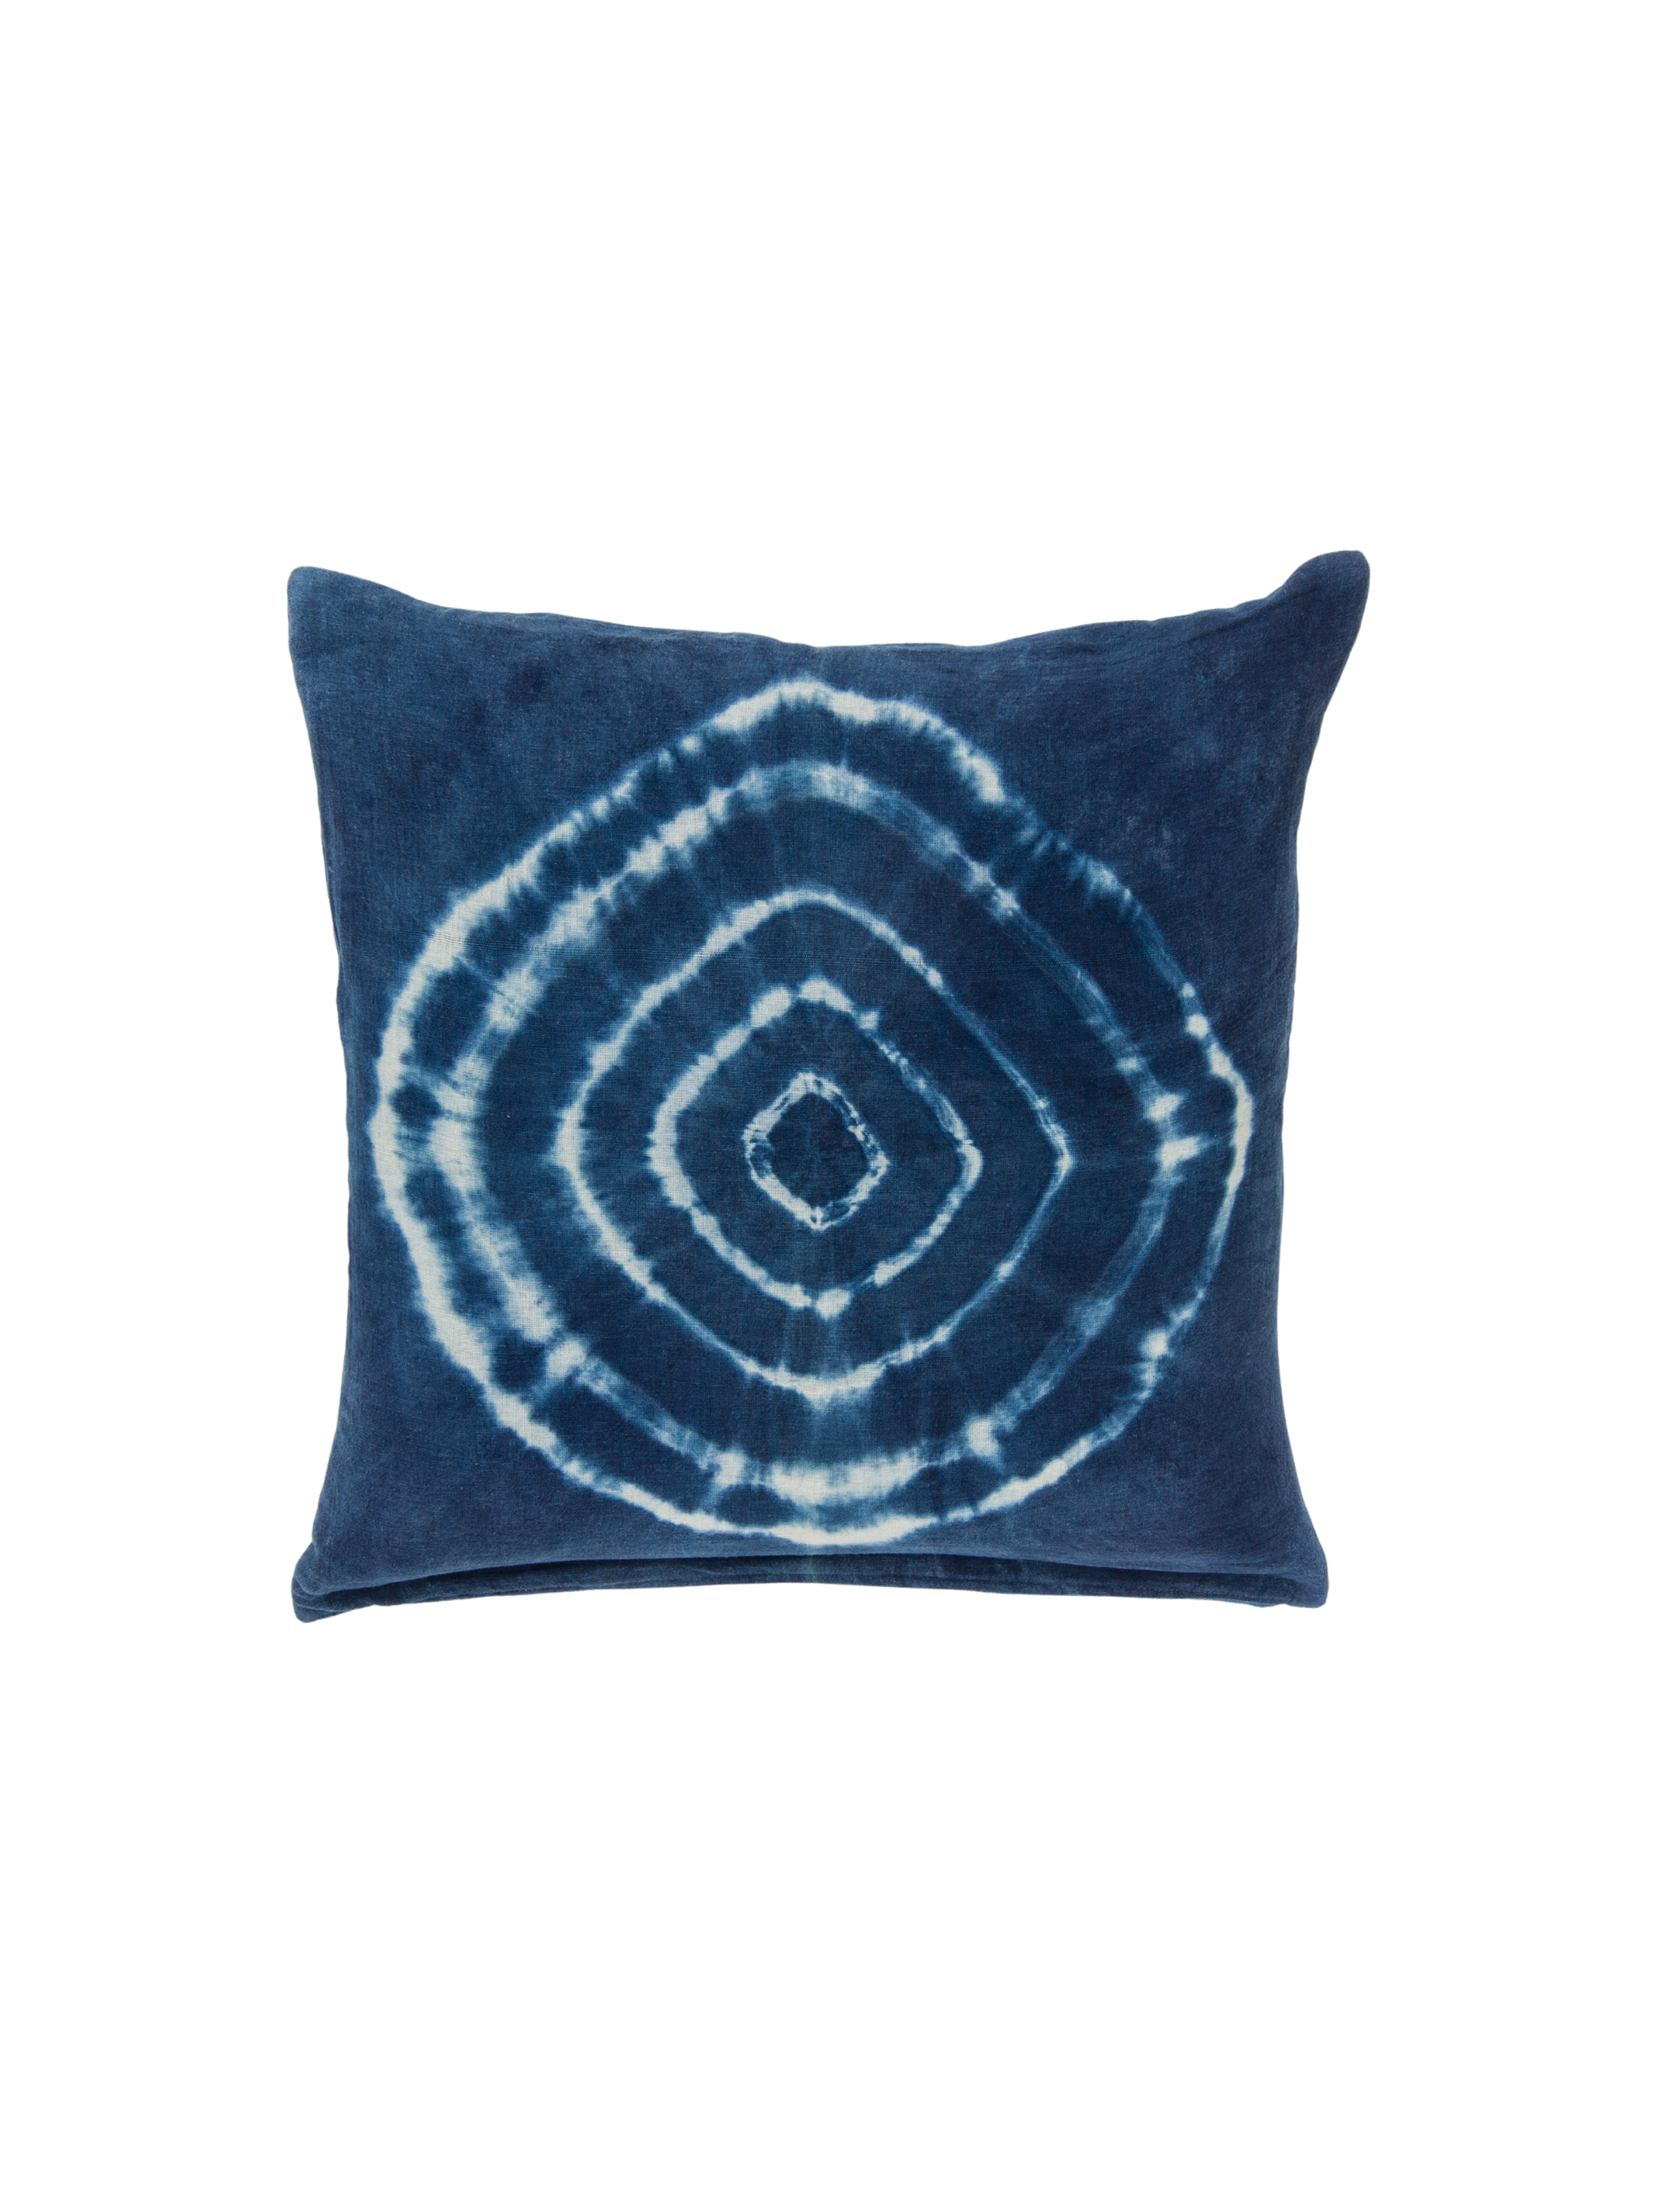 Indigo Blue Circle Tie Dye Decorative Pillow